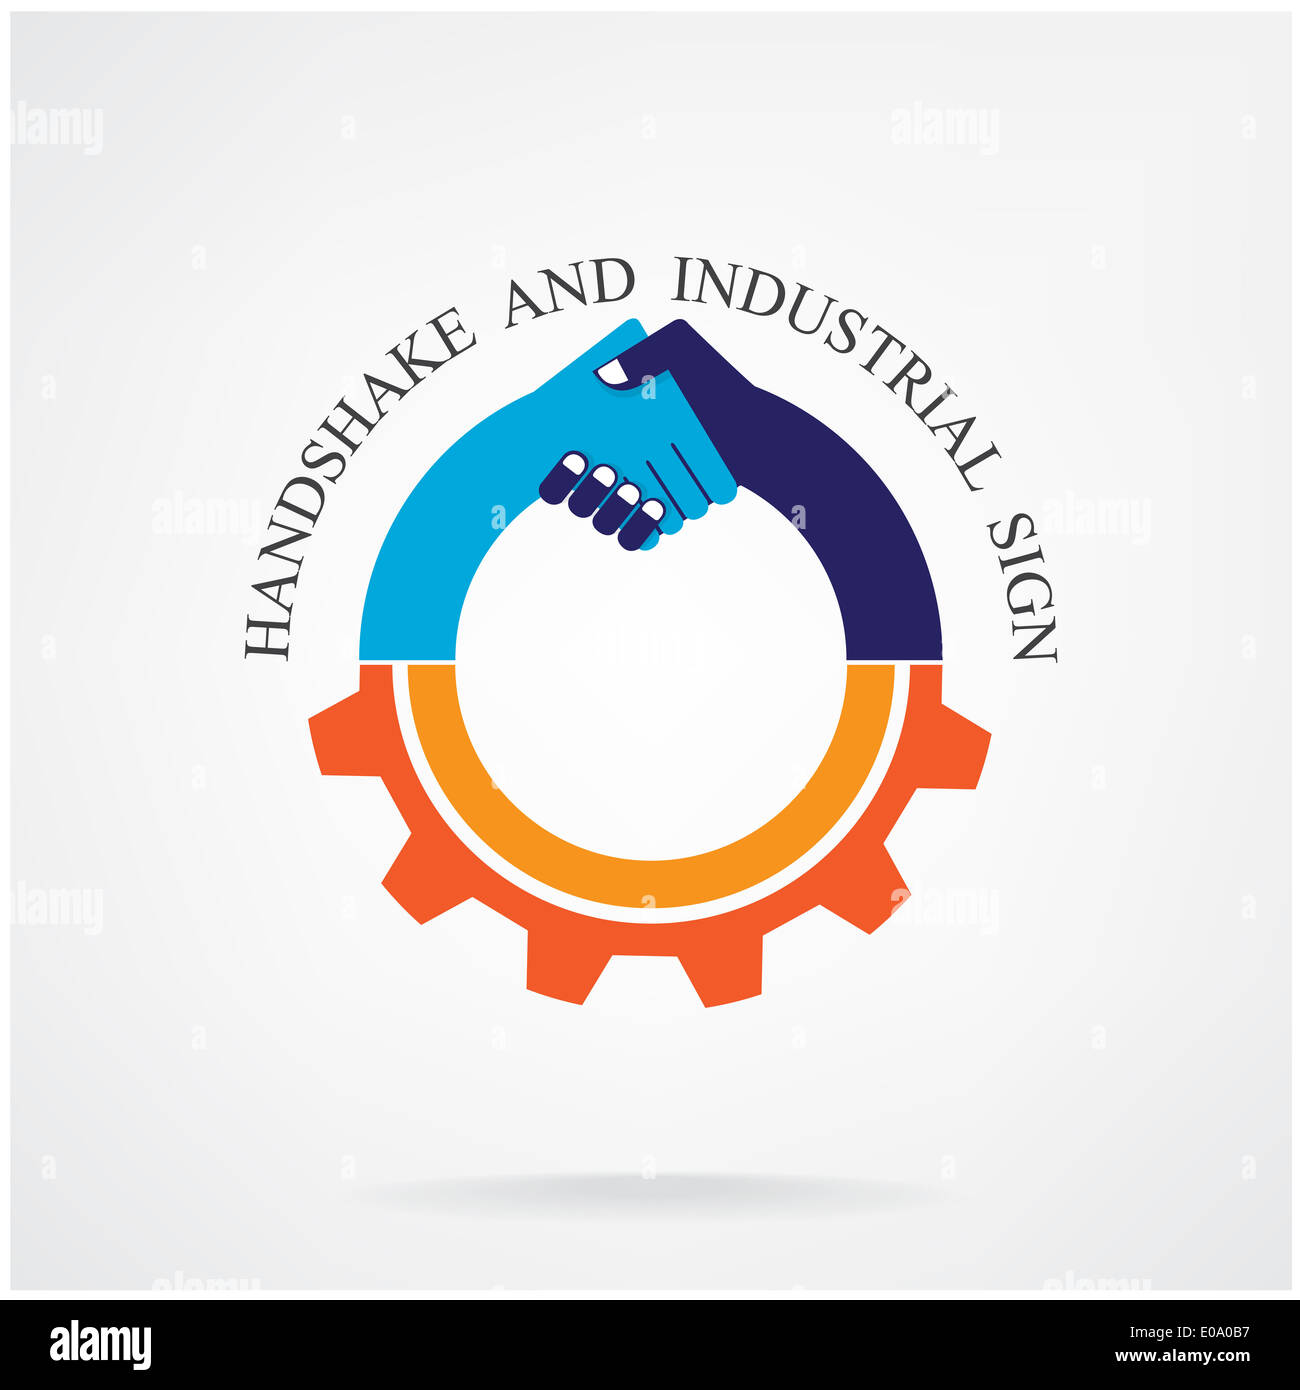 industrial design concept poster